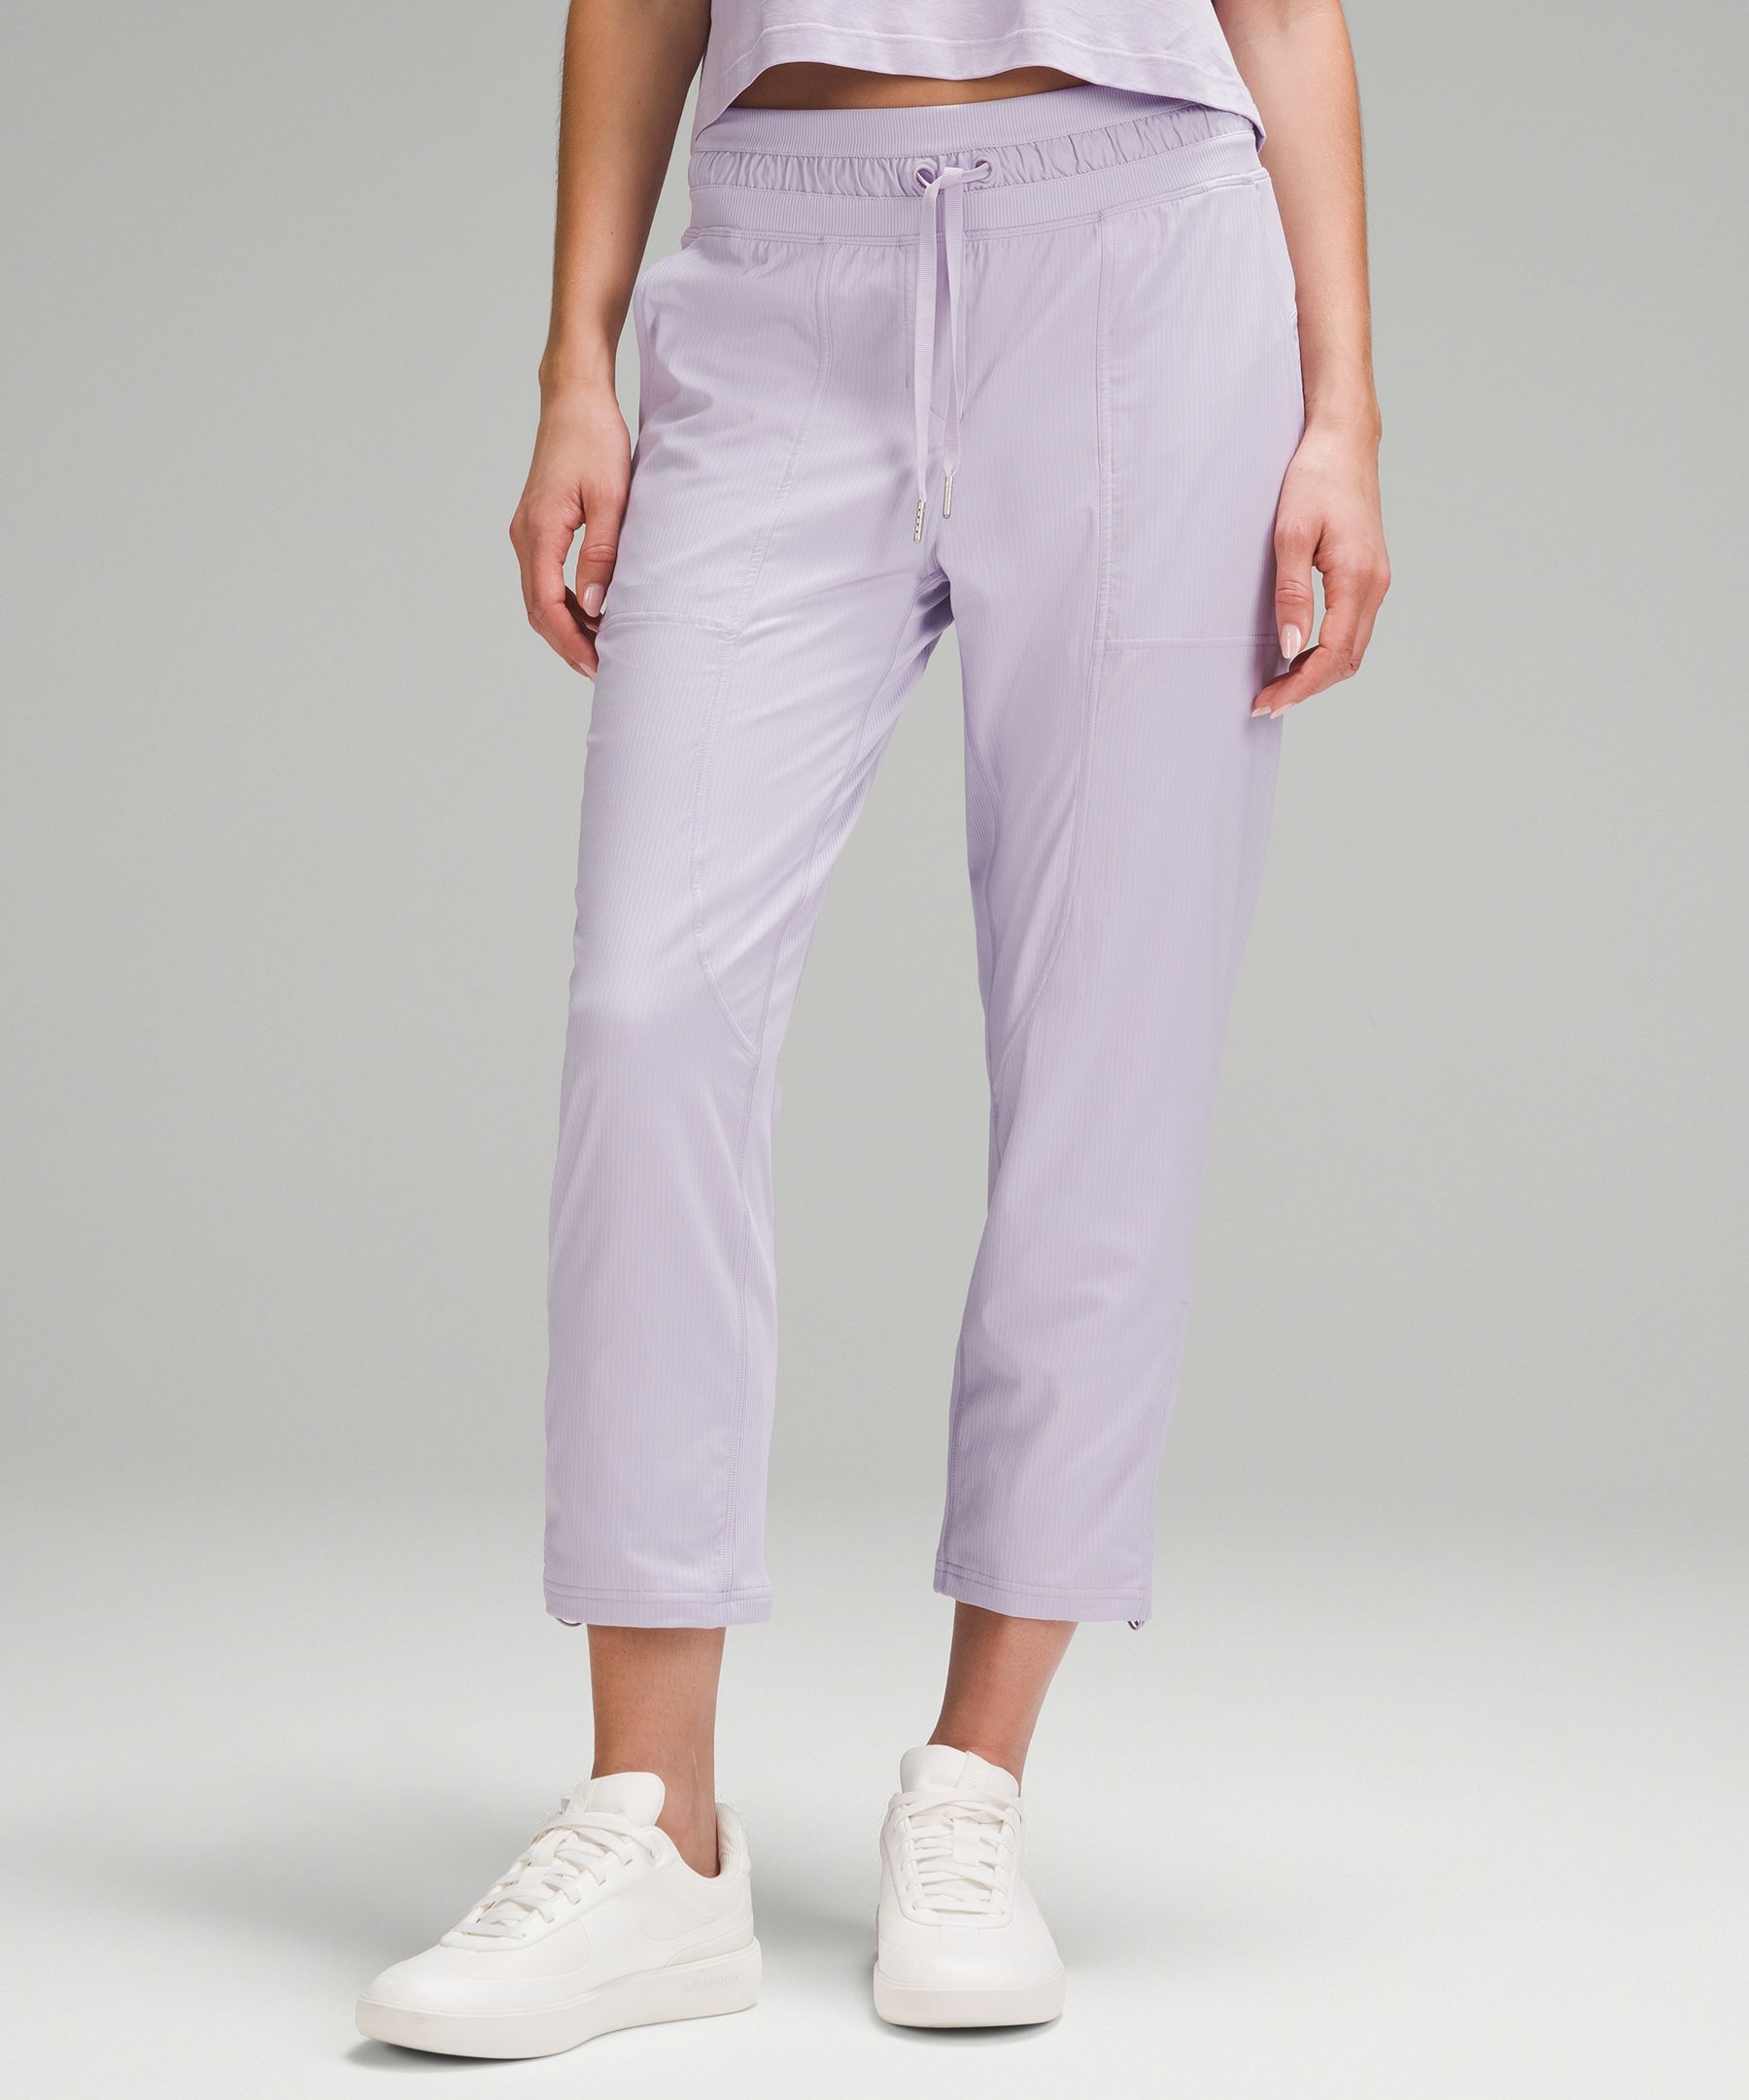 Lululemon Dance studio Pant II *Liner Purple Size 8 - $180 (49% Off Retail)  - From Marissa